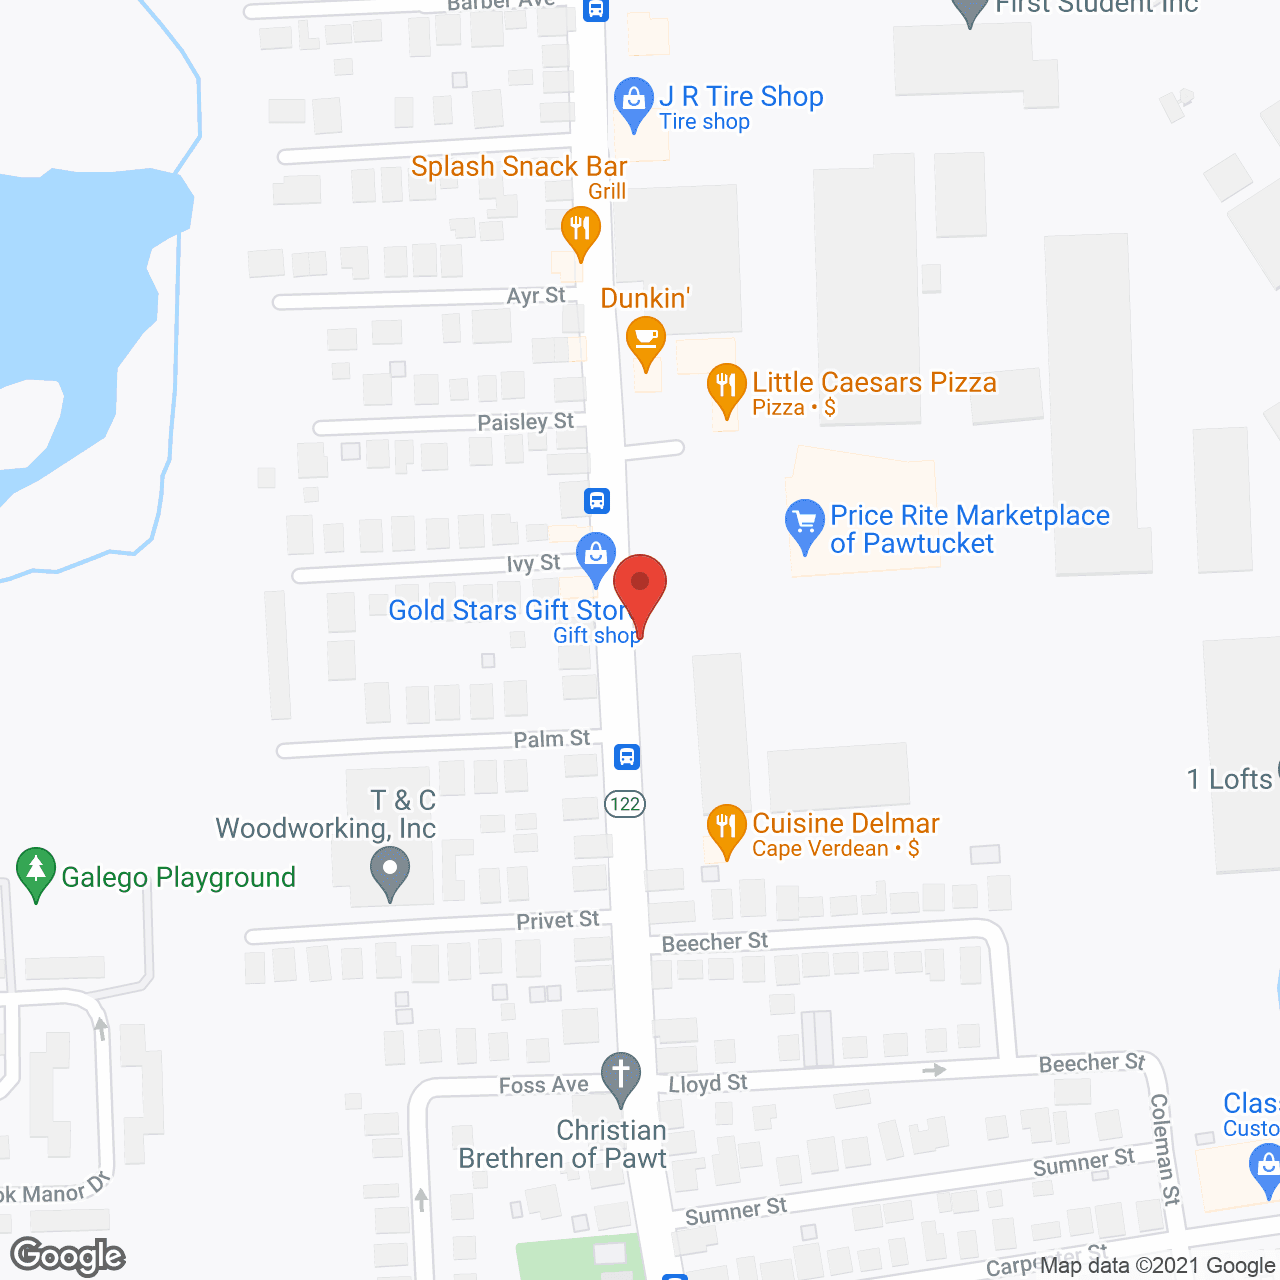 Coates Manor in google map